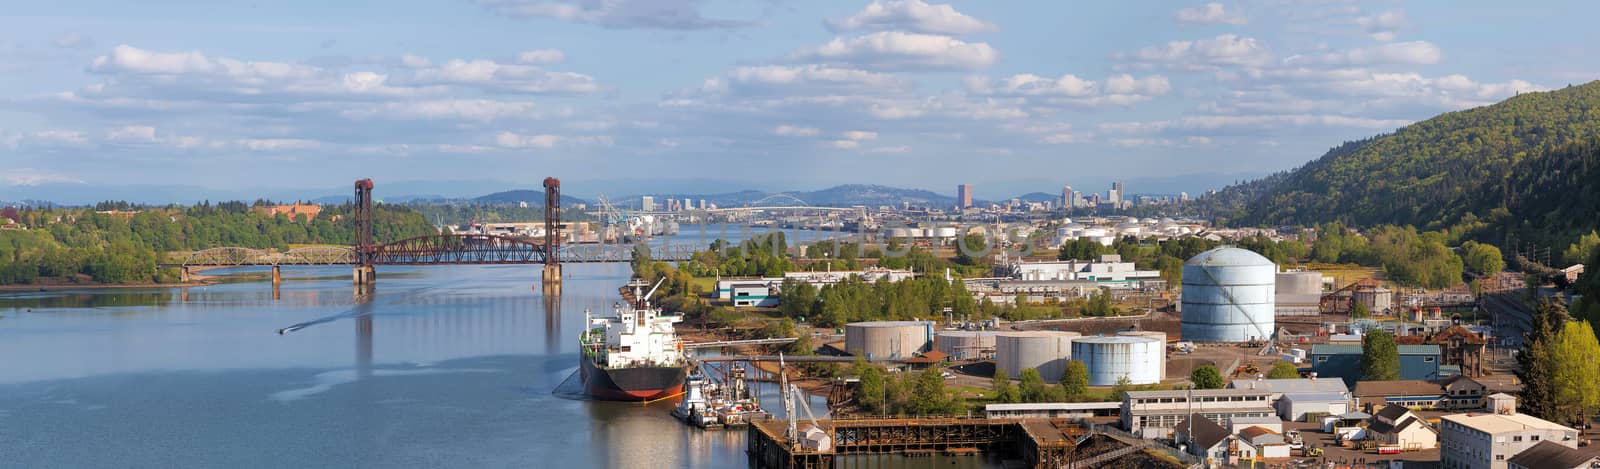 Portland Shipyard Along Willamette River Panorama by jpldesigns